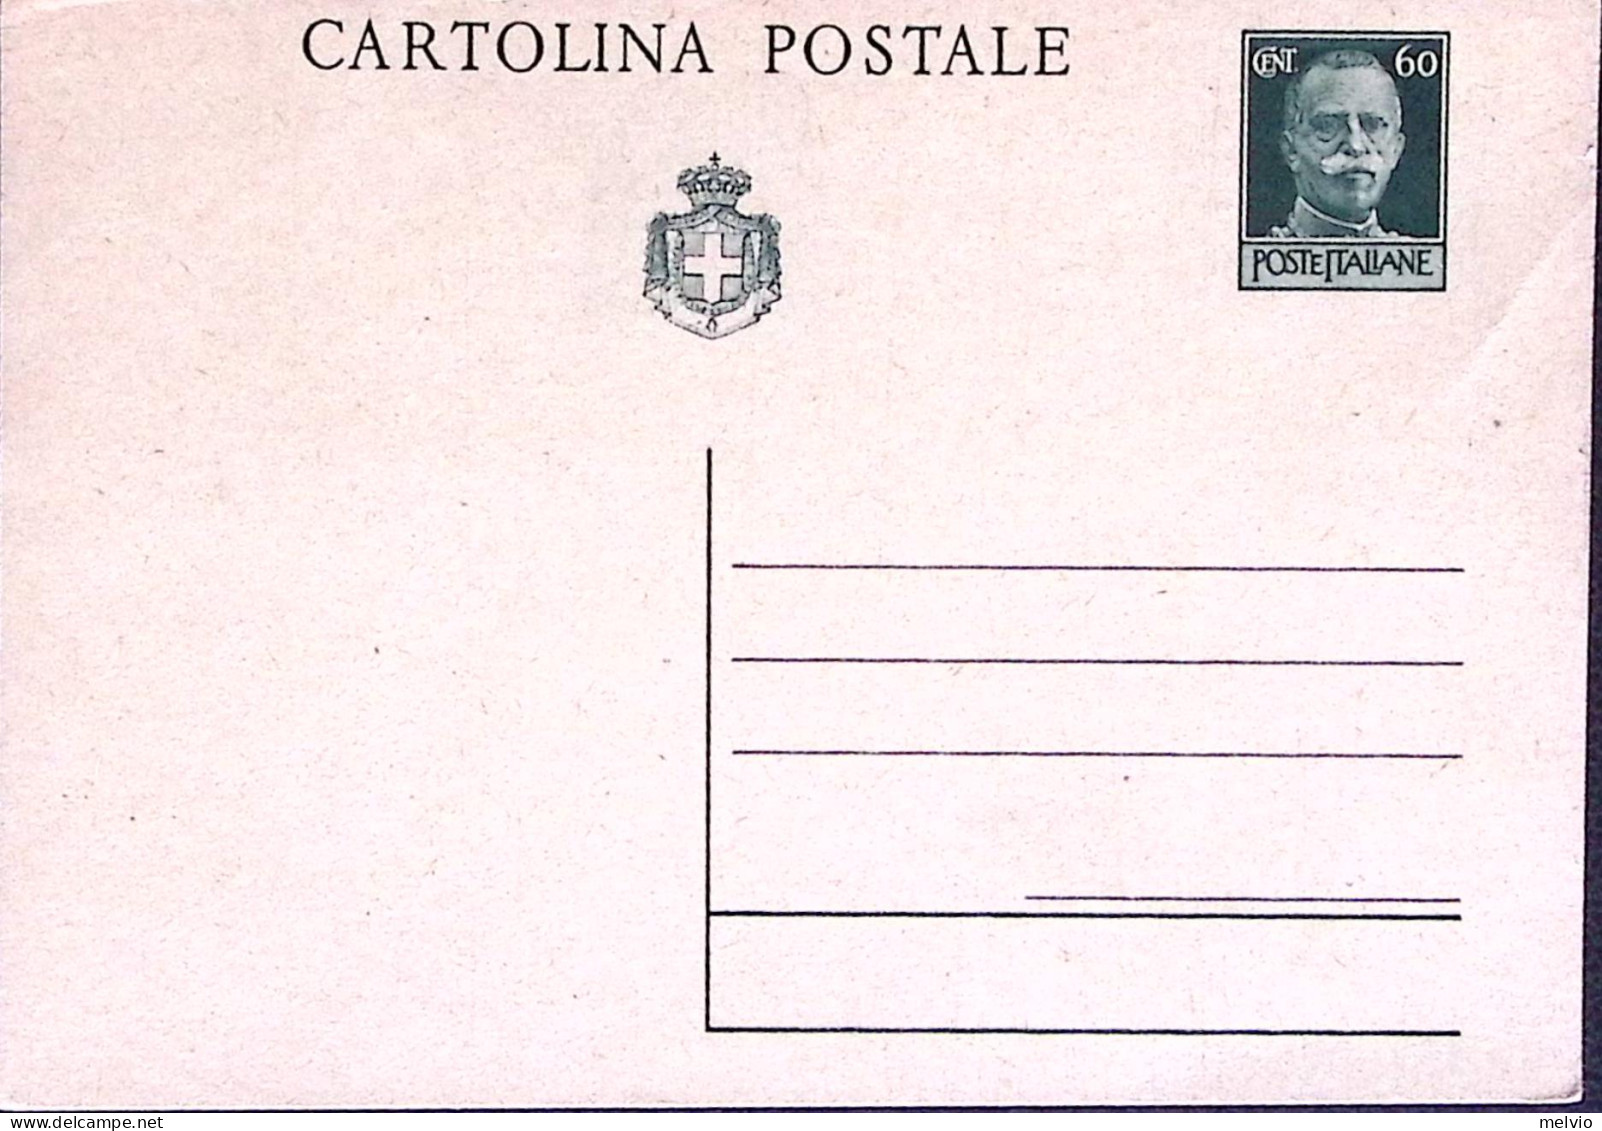 1945-Cartolina Postale Imperiale Senza Fasci C.60 Verde Su Crema Nuova - Ganzsachen